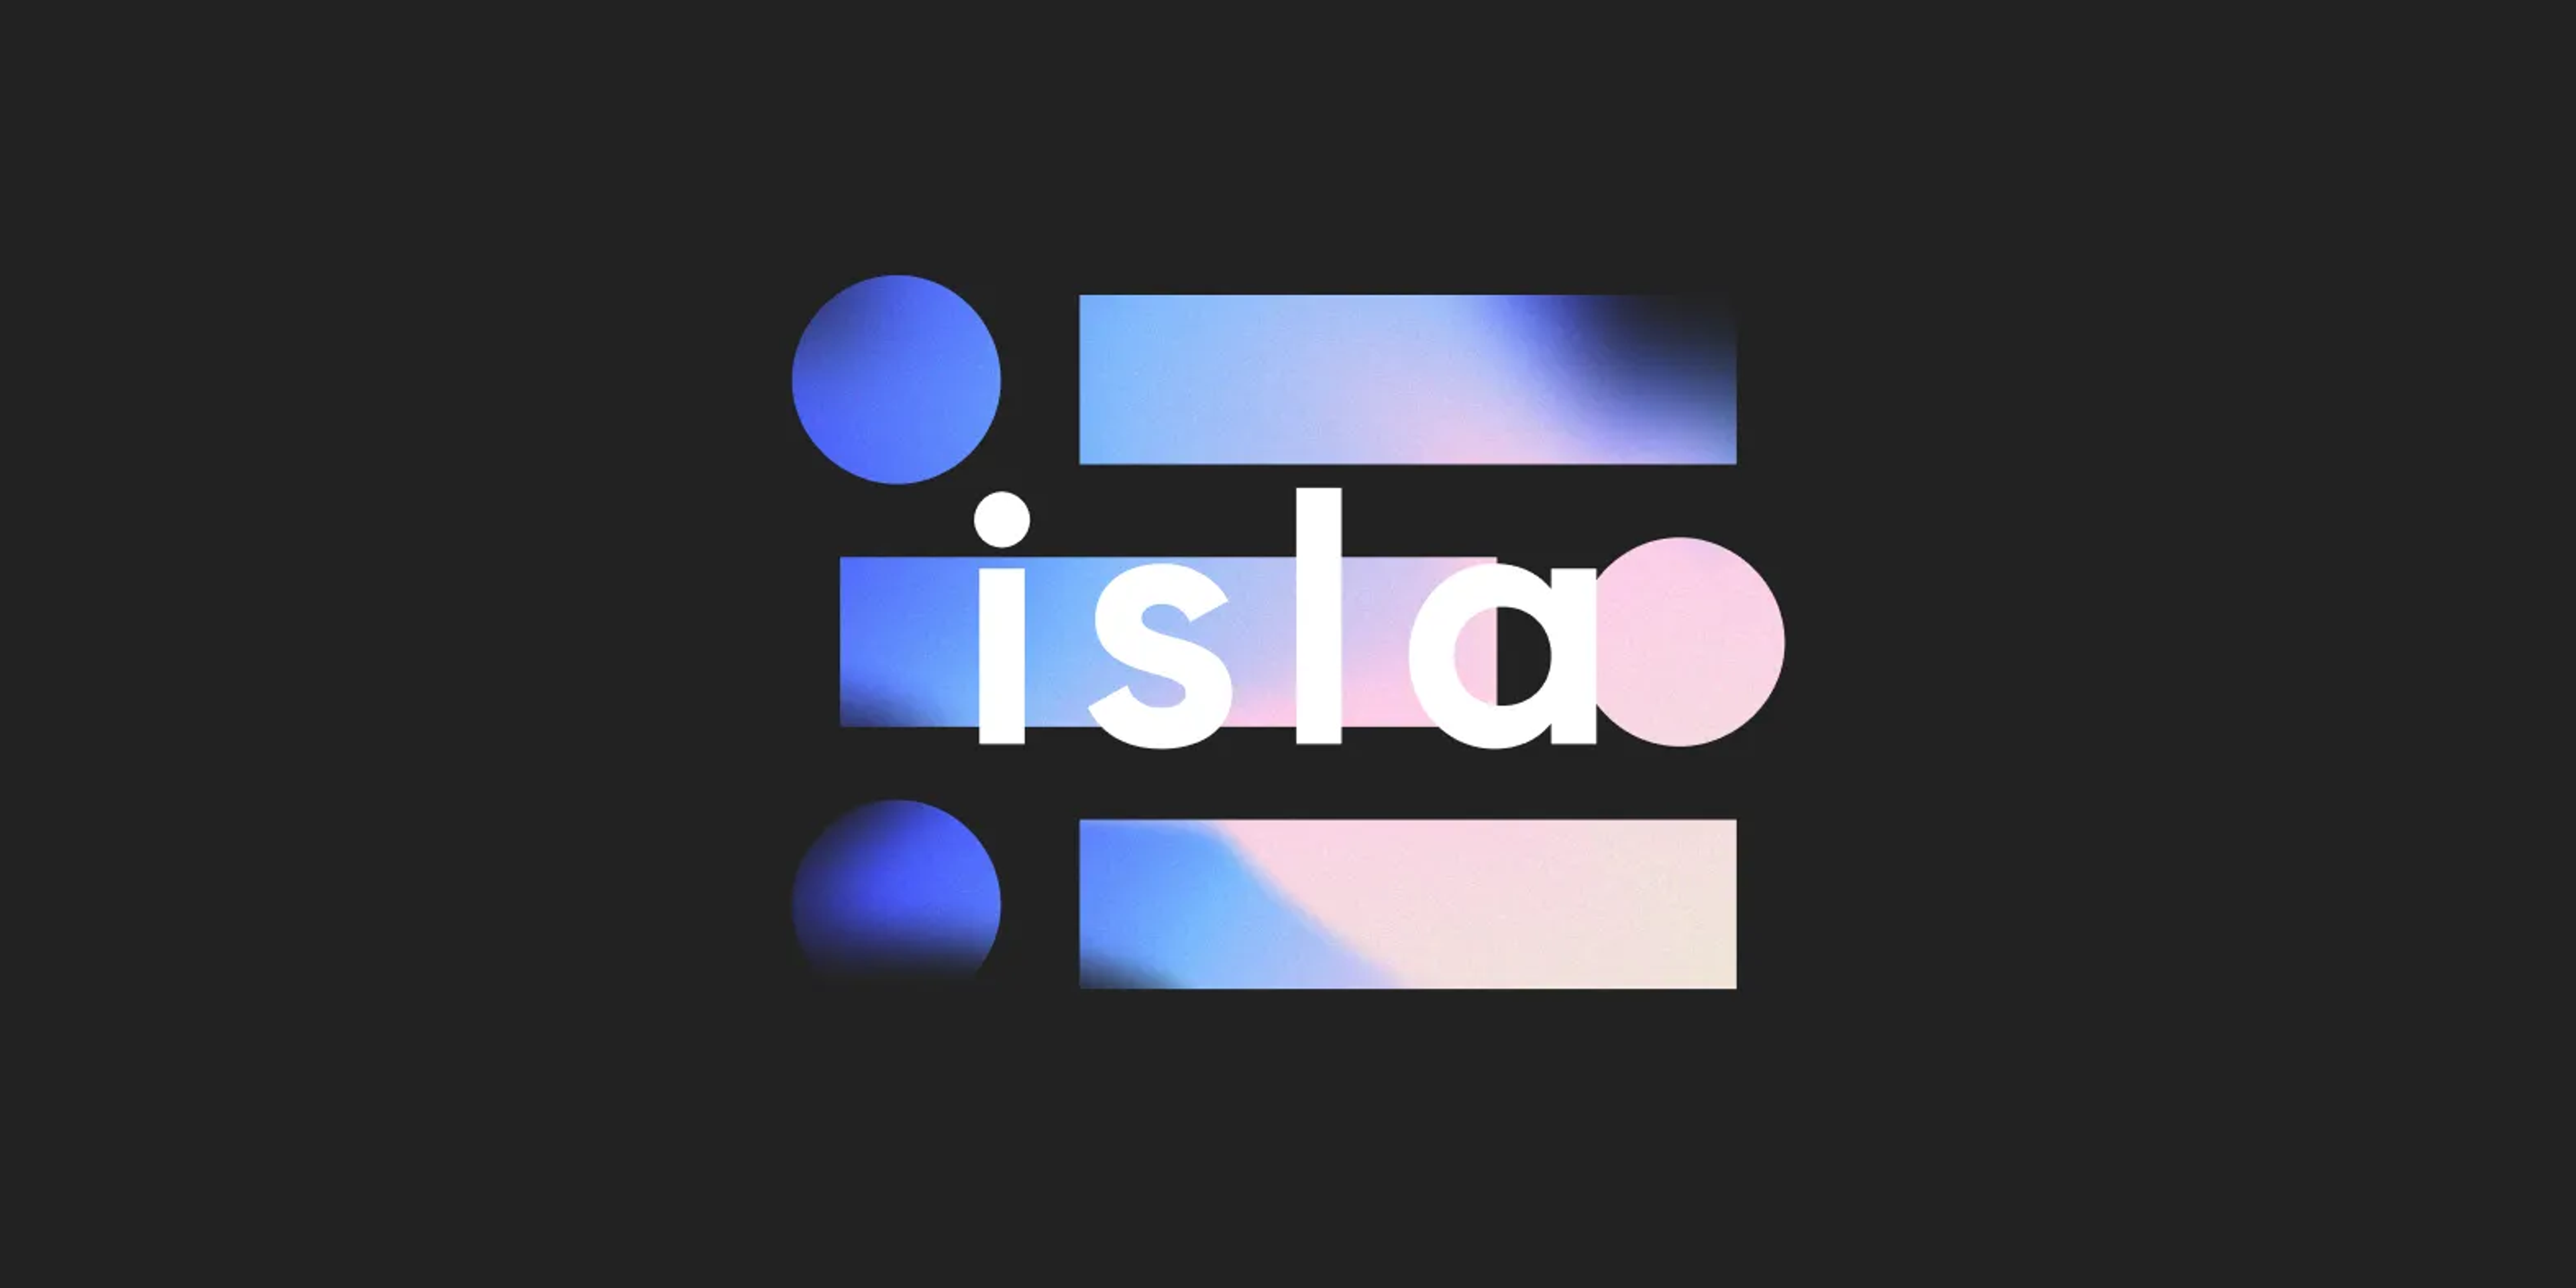 isla cover image with logo reading isla